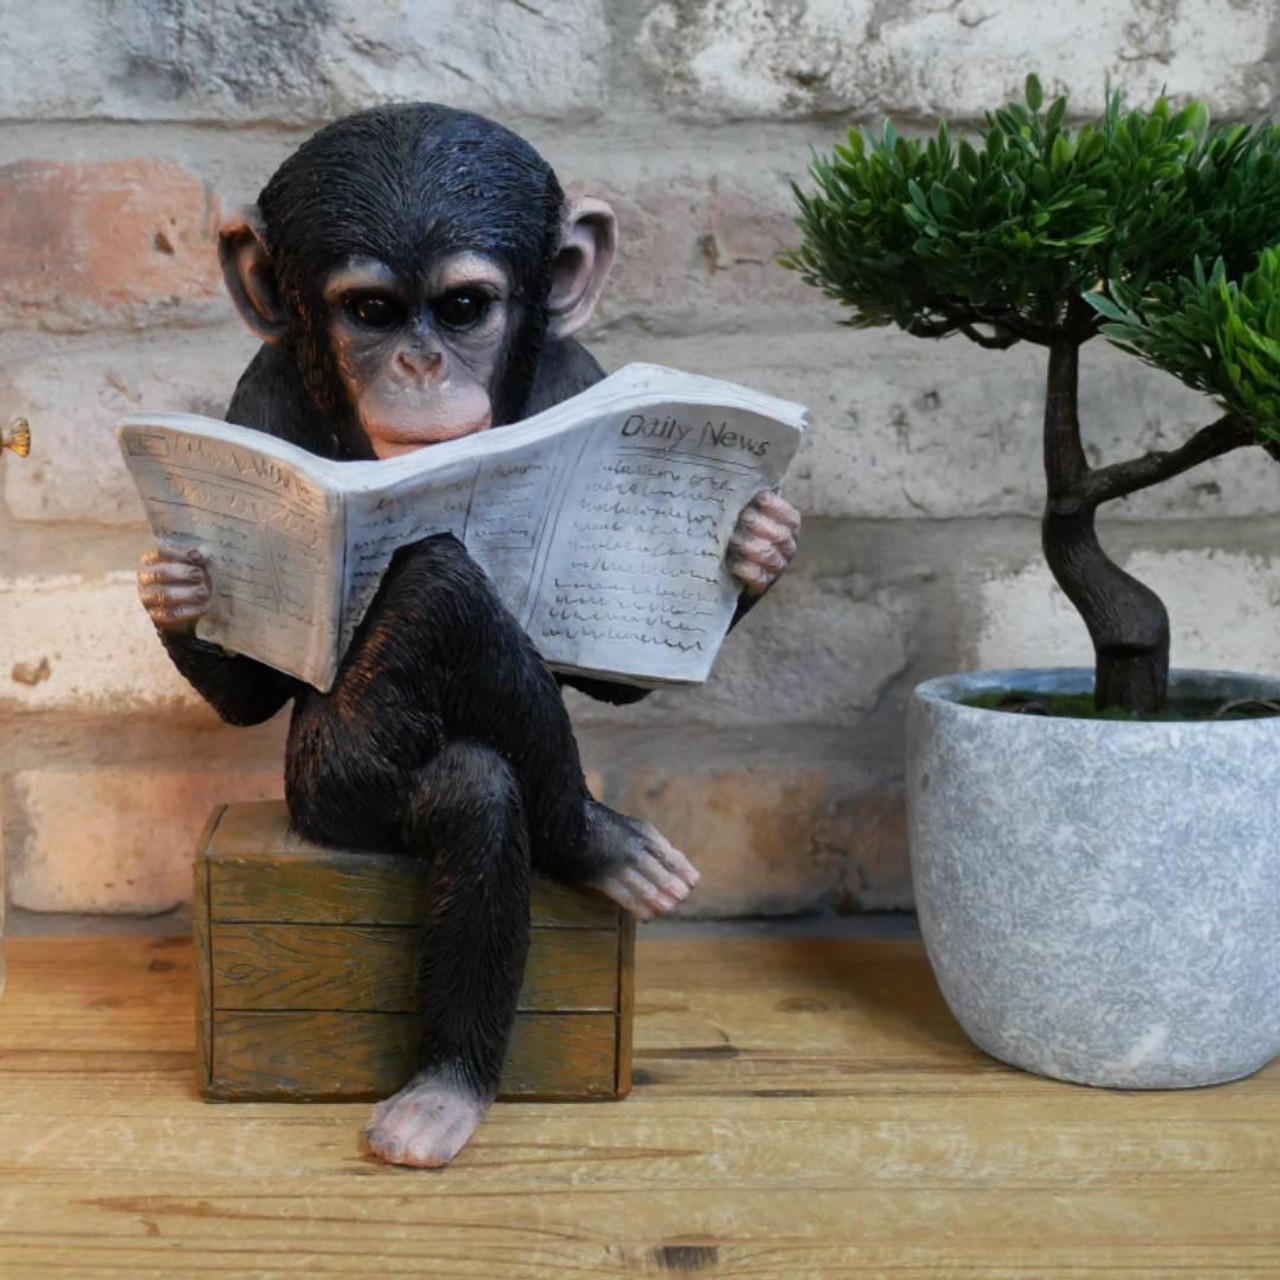 Cute Monkey Reading The News 